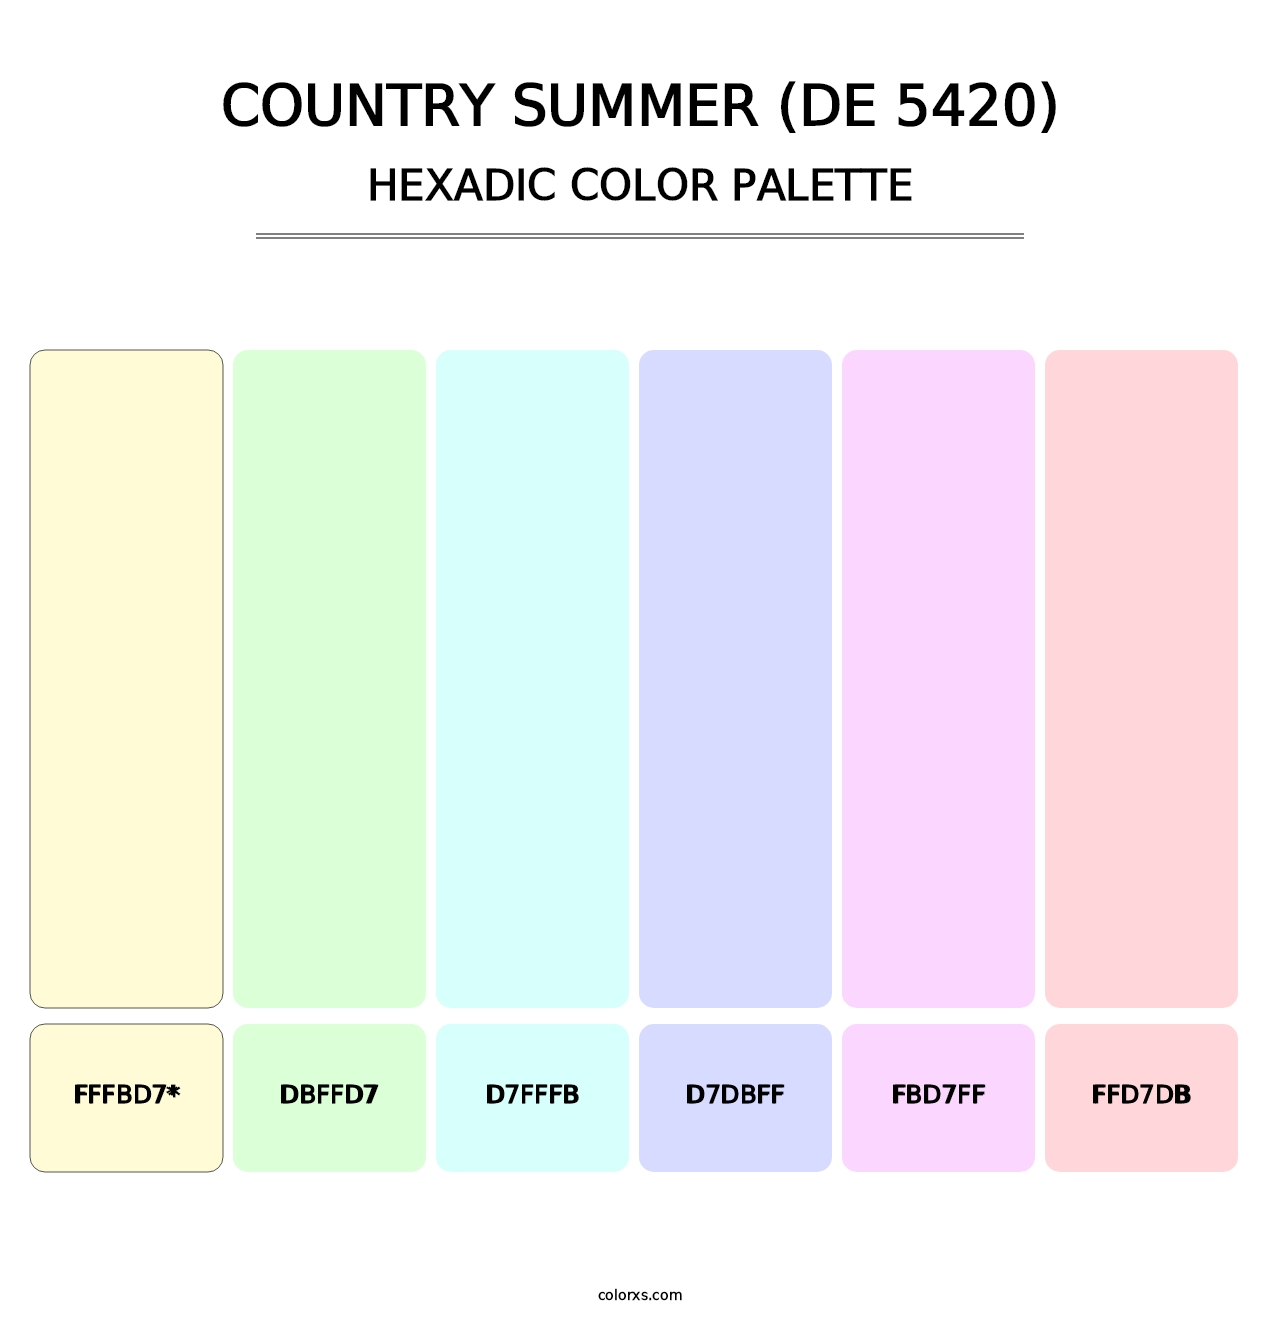 Country Summer (DE 5420) - Hexadic Color Palette